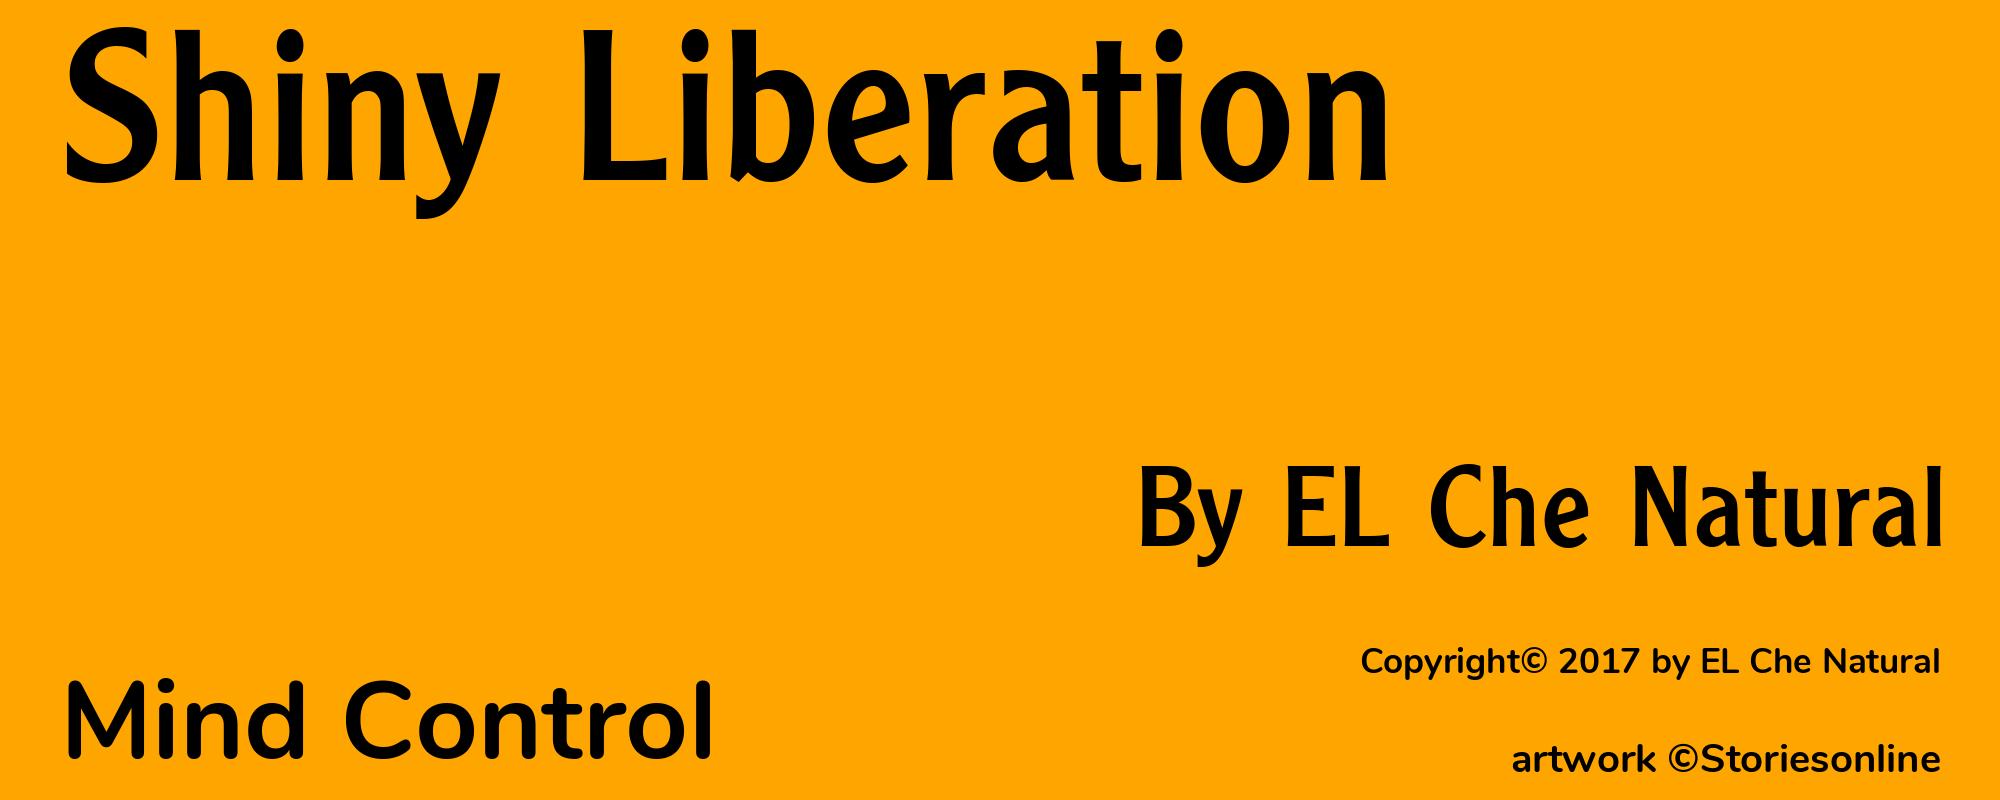 Shiny Liberation - Cover